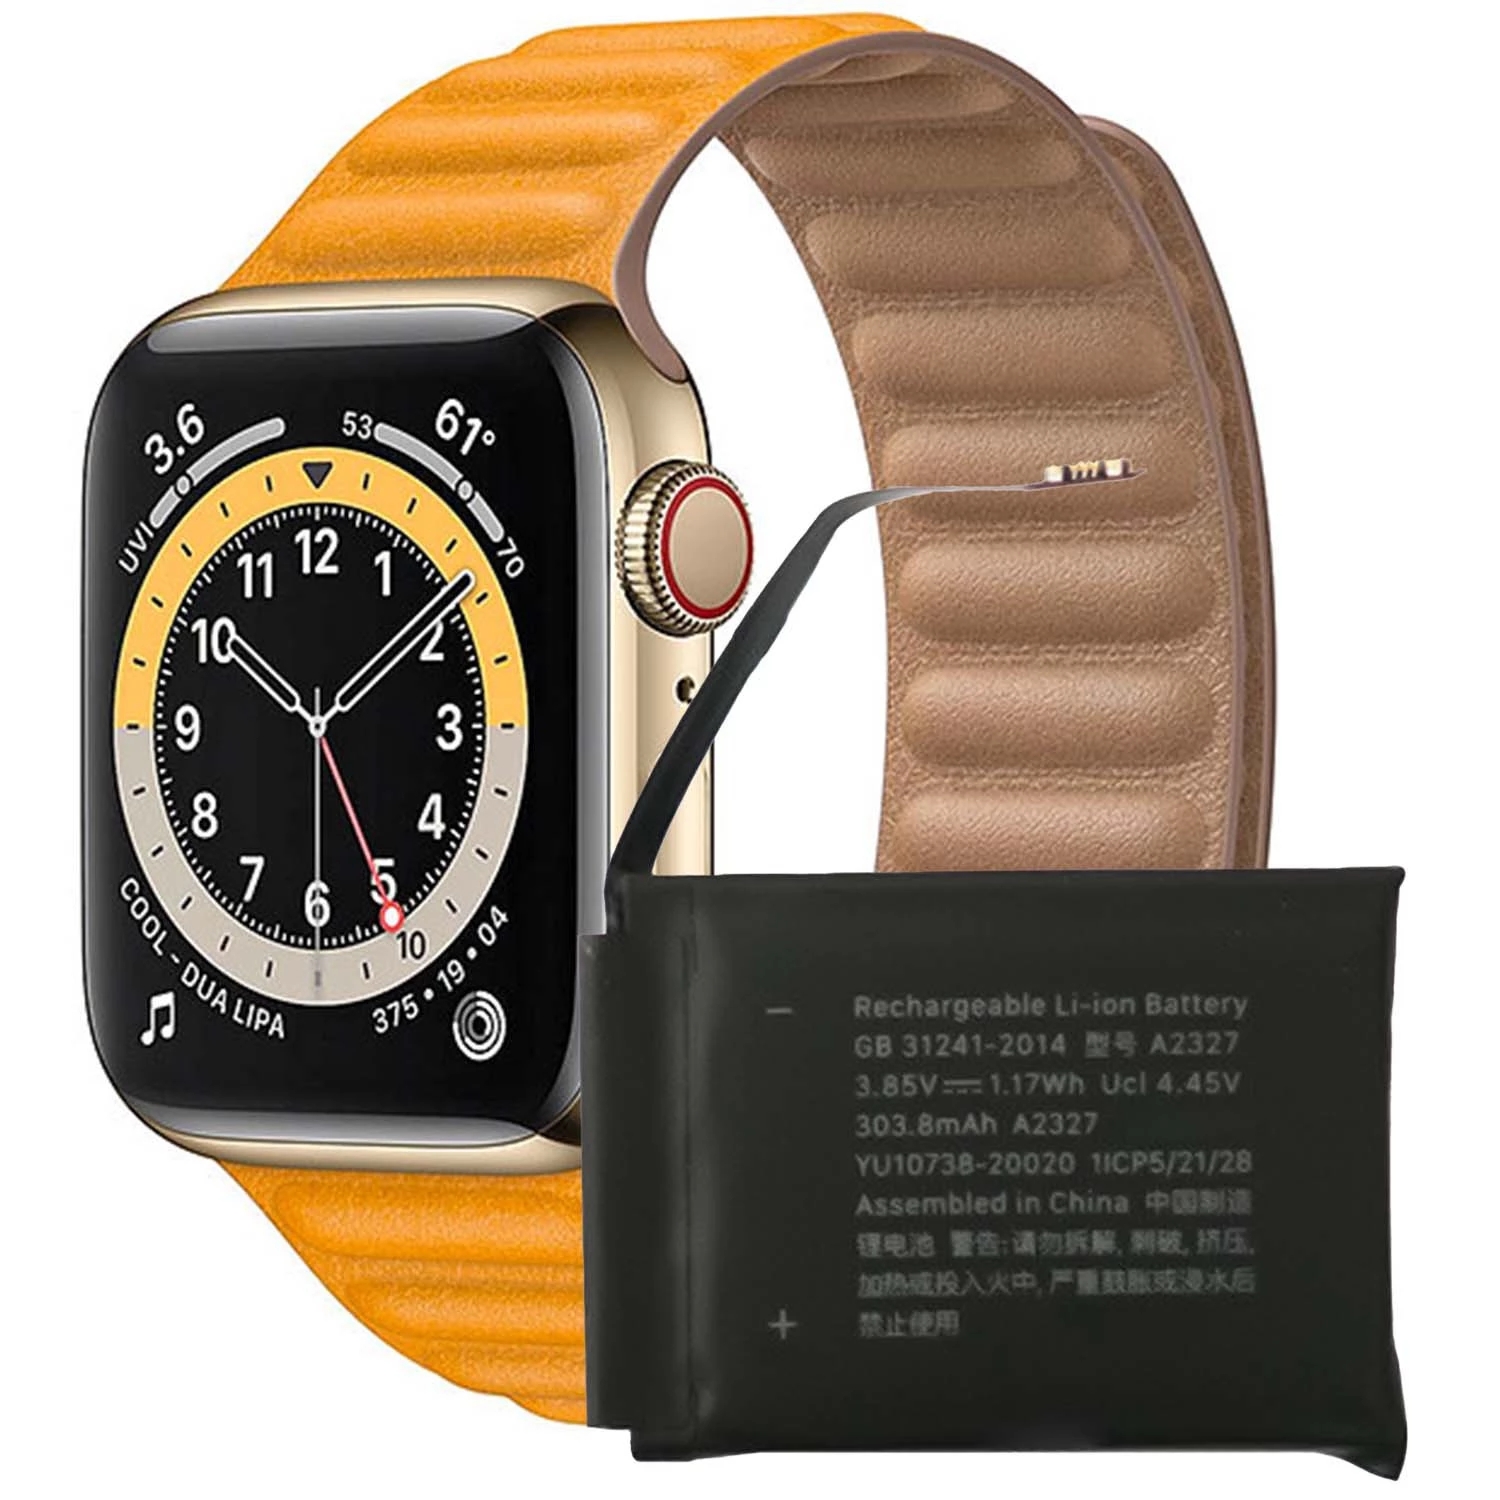 Apple Watch A2327 Battery